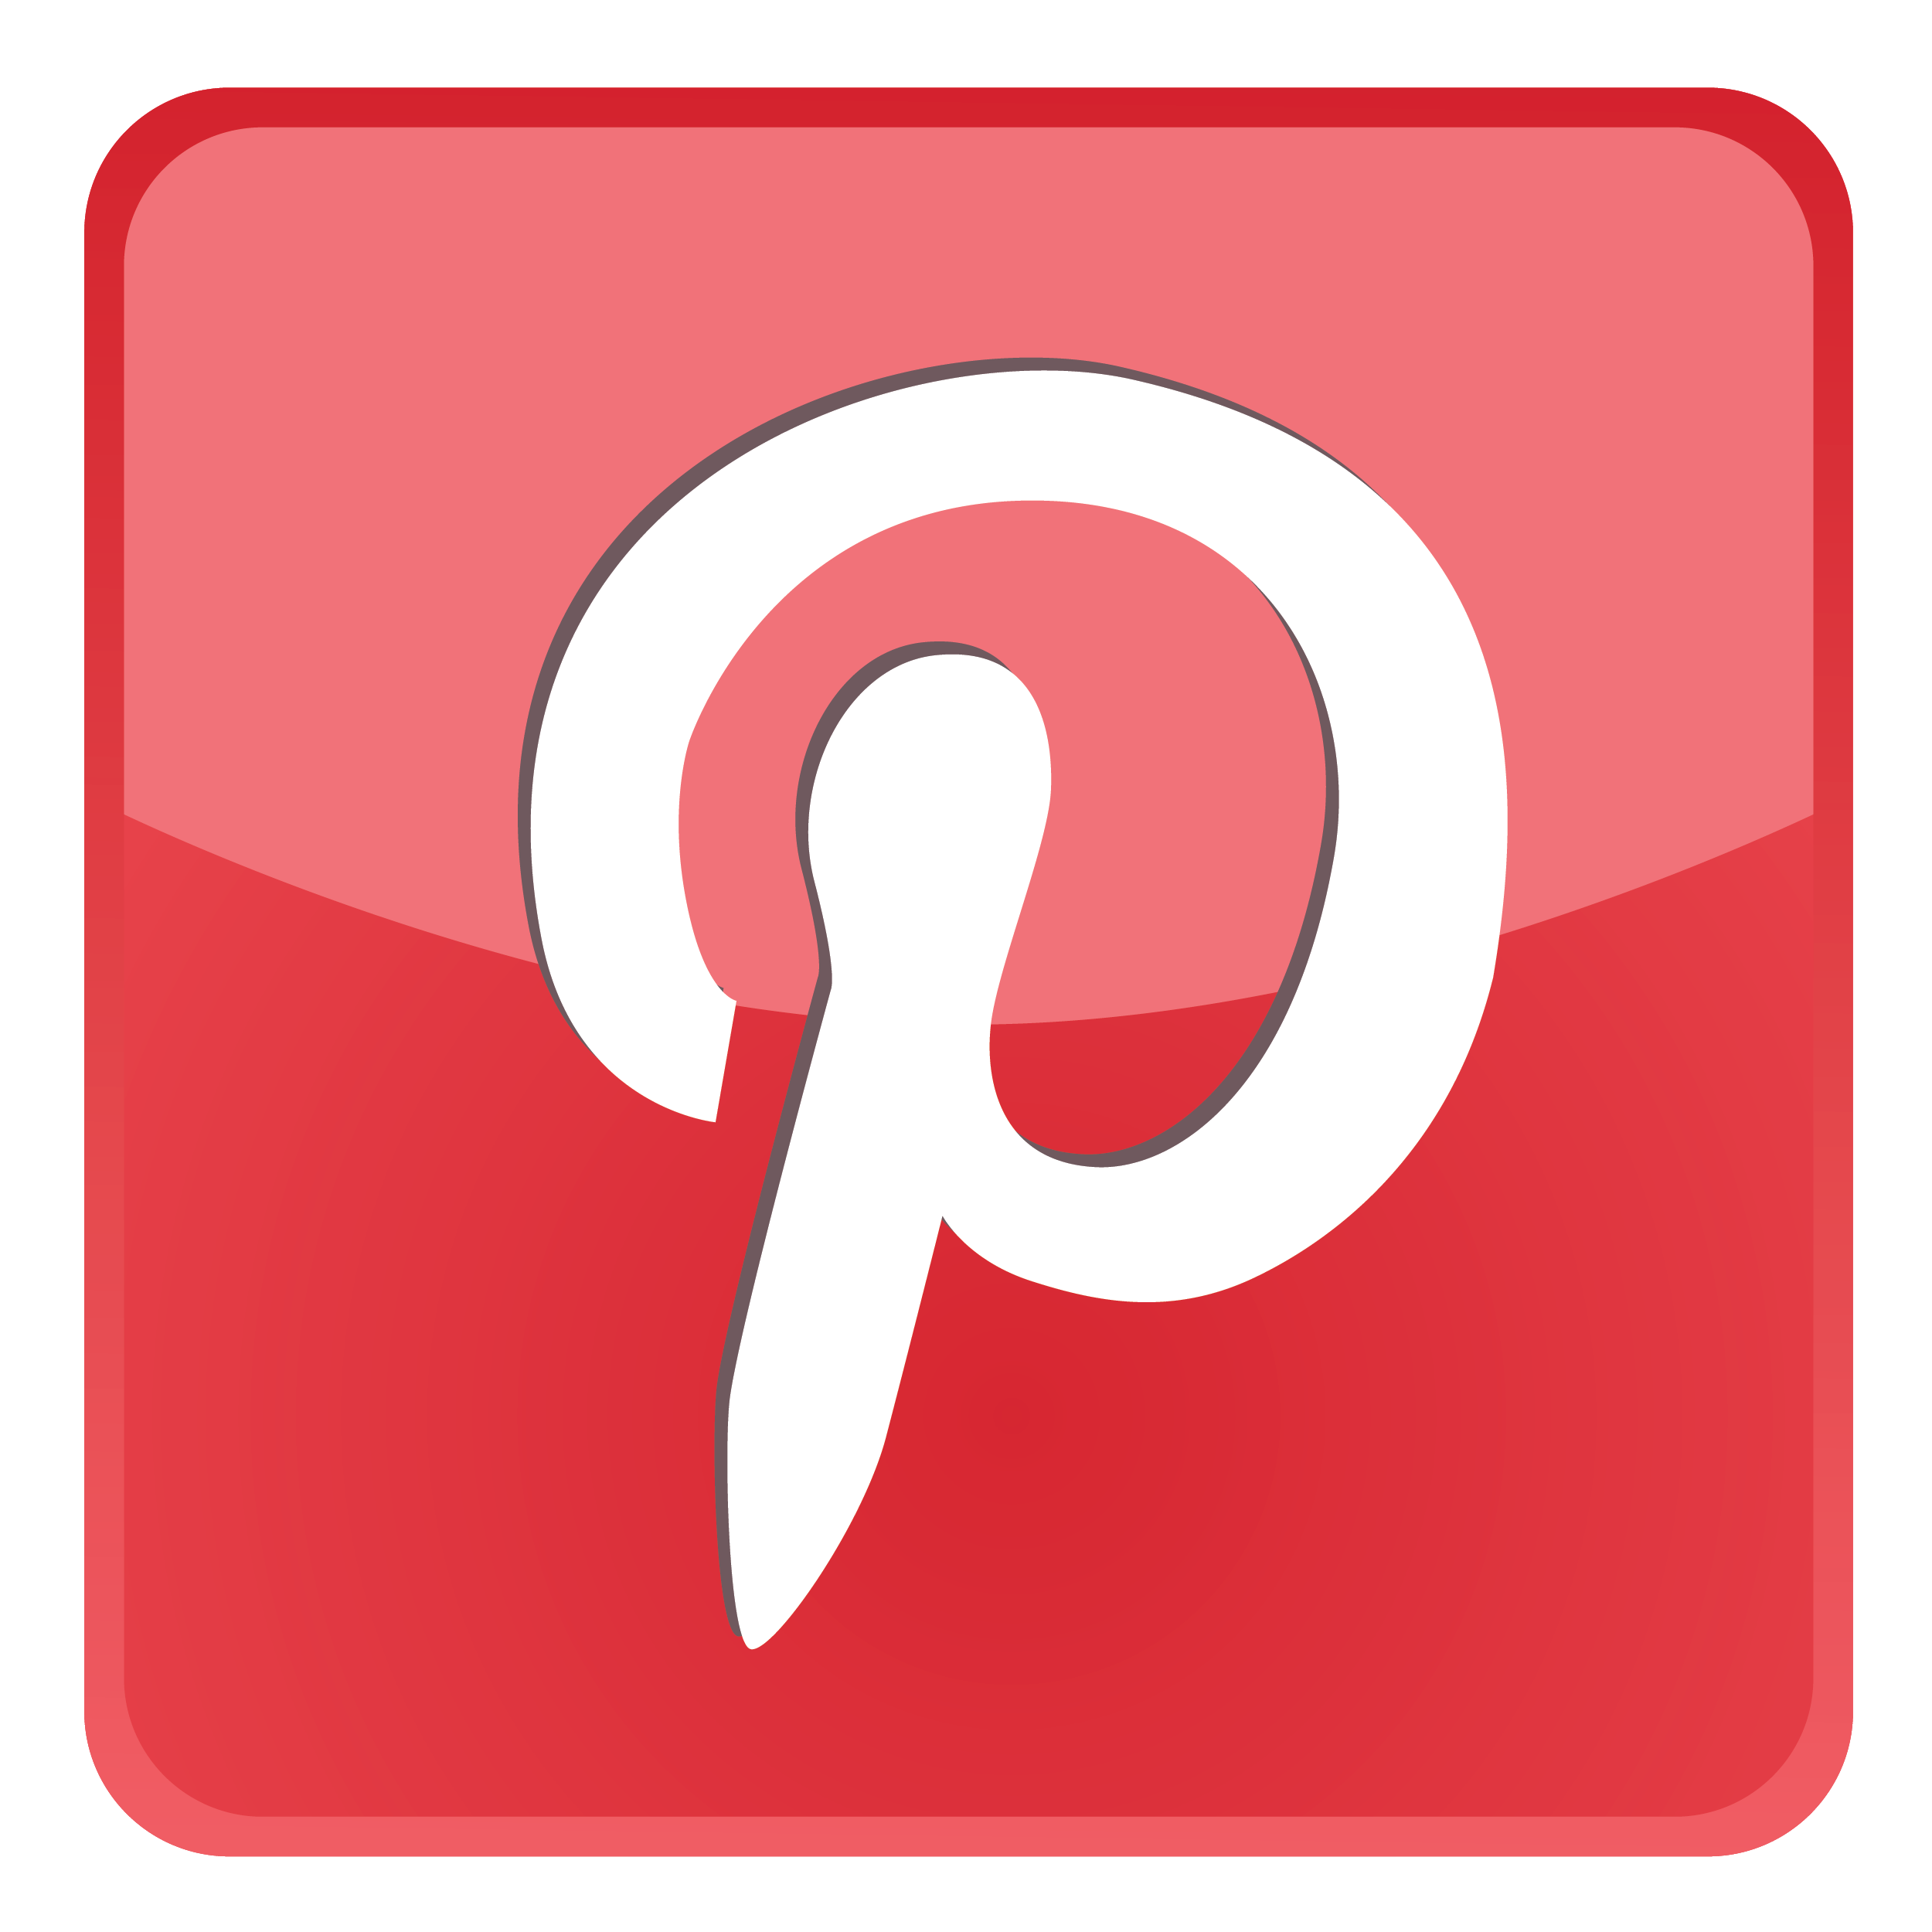 16 Pinterest Logo Vector Images